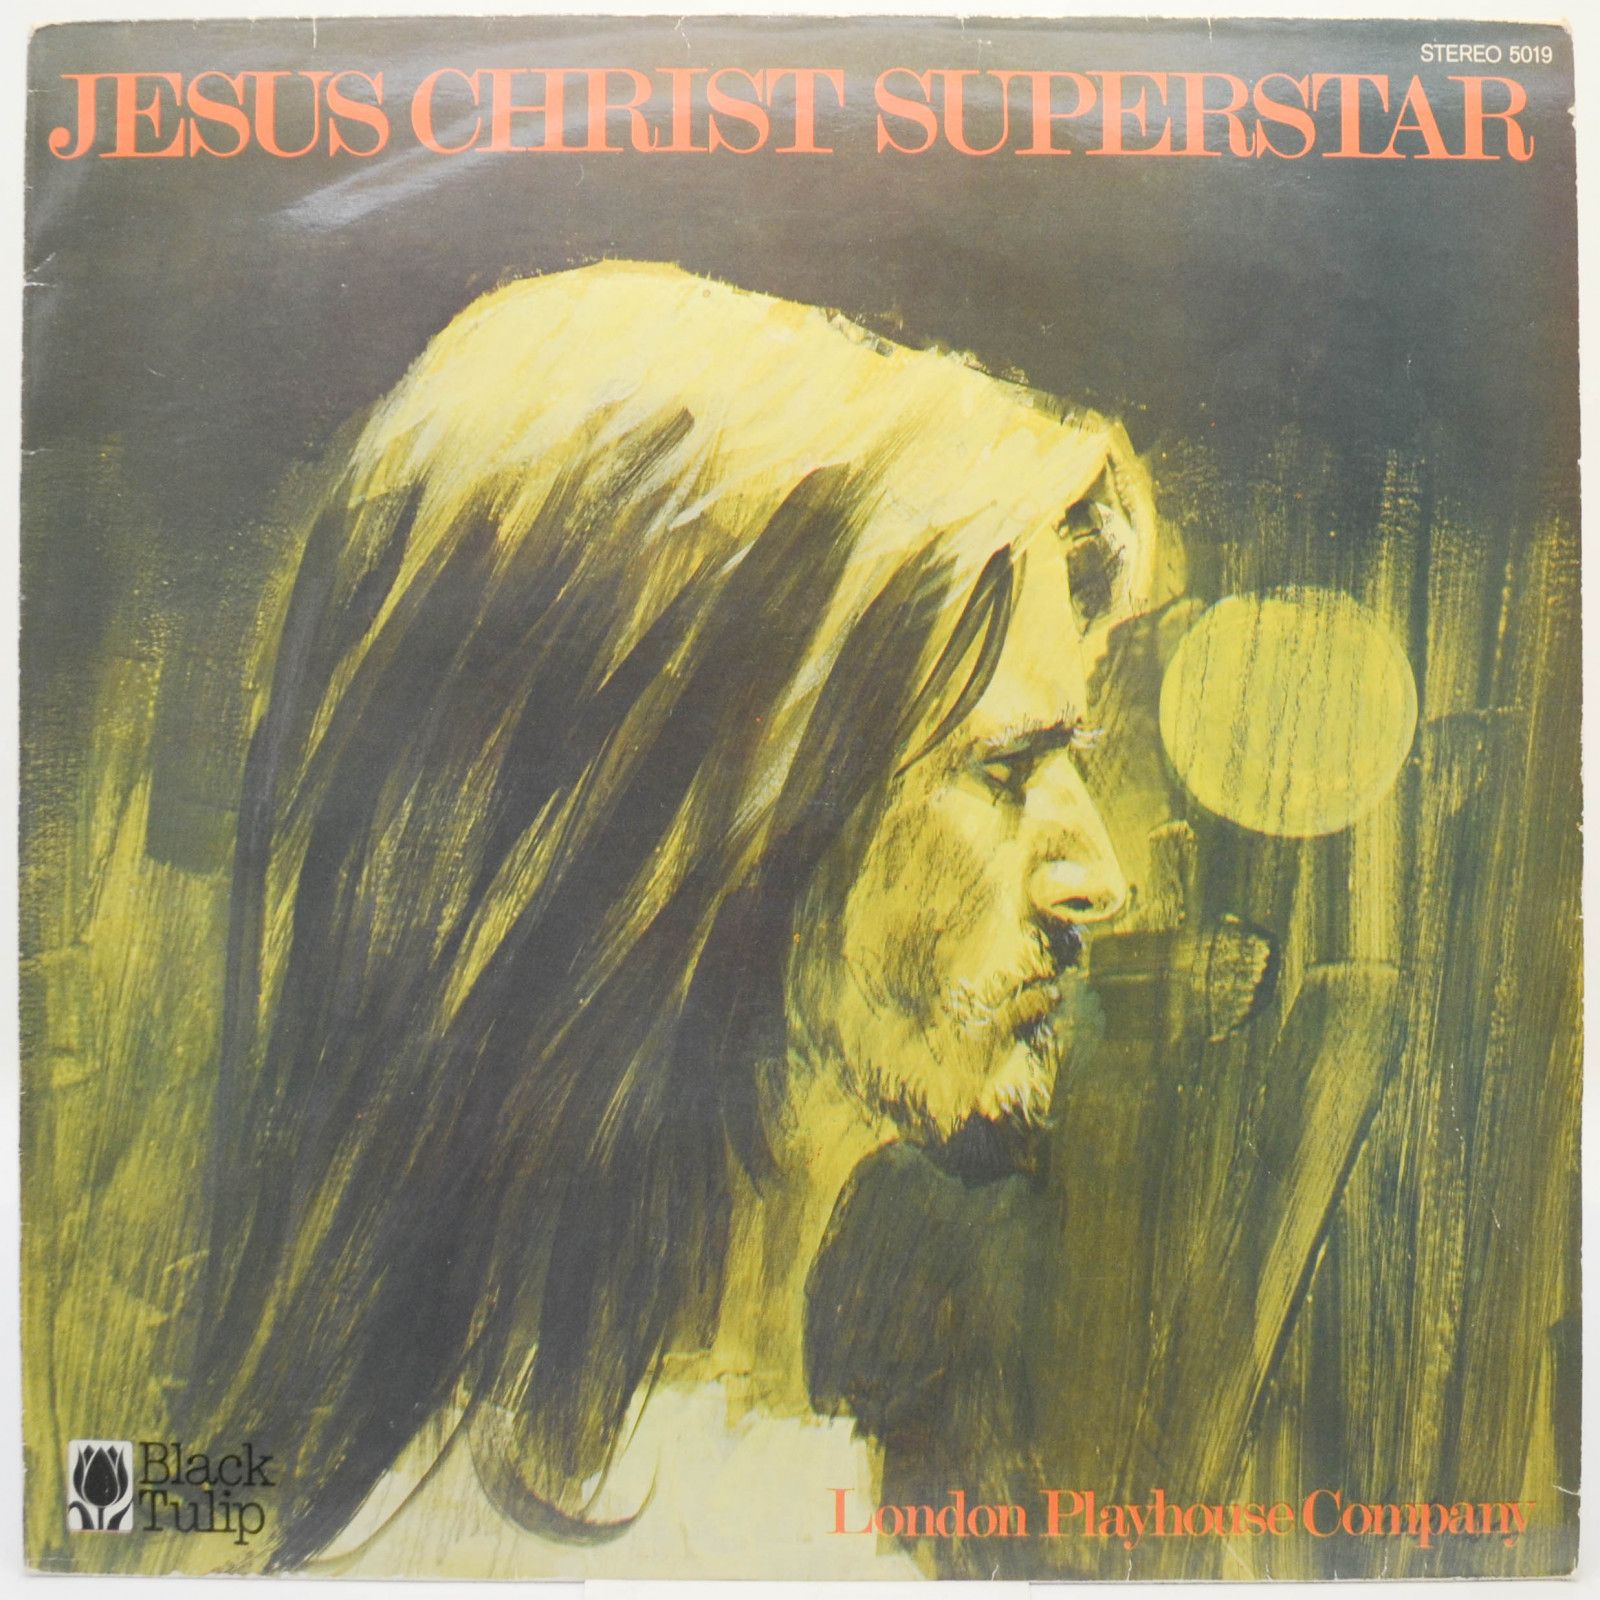 London Playhouse Company — Jesus Christ Superstar,